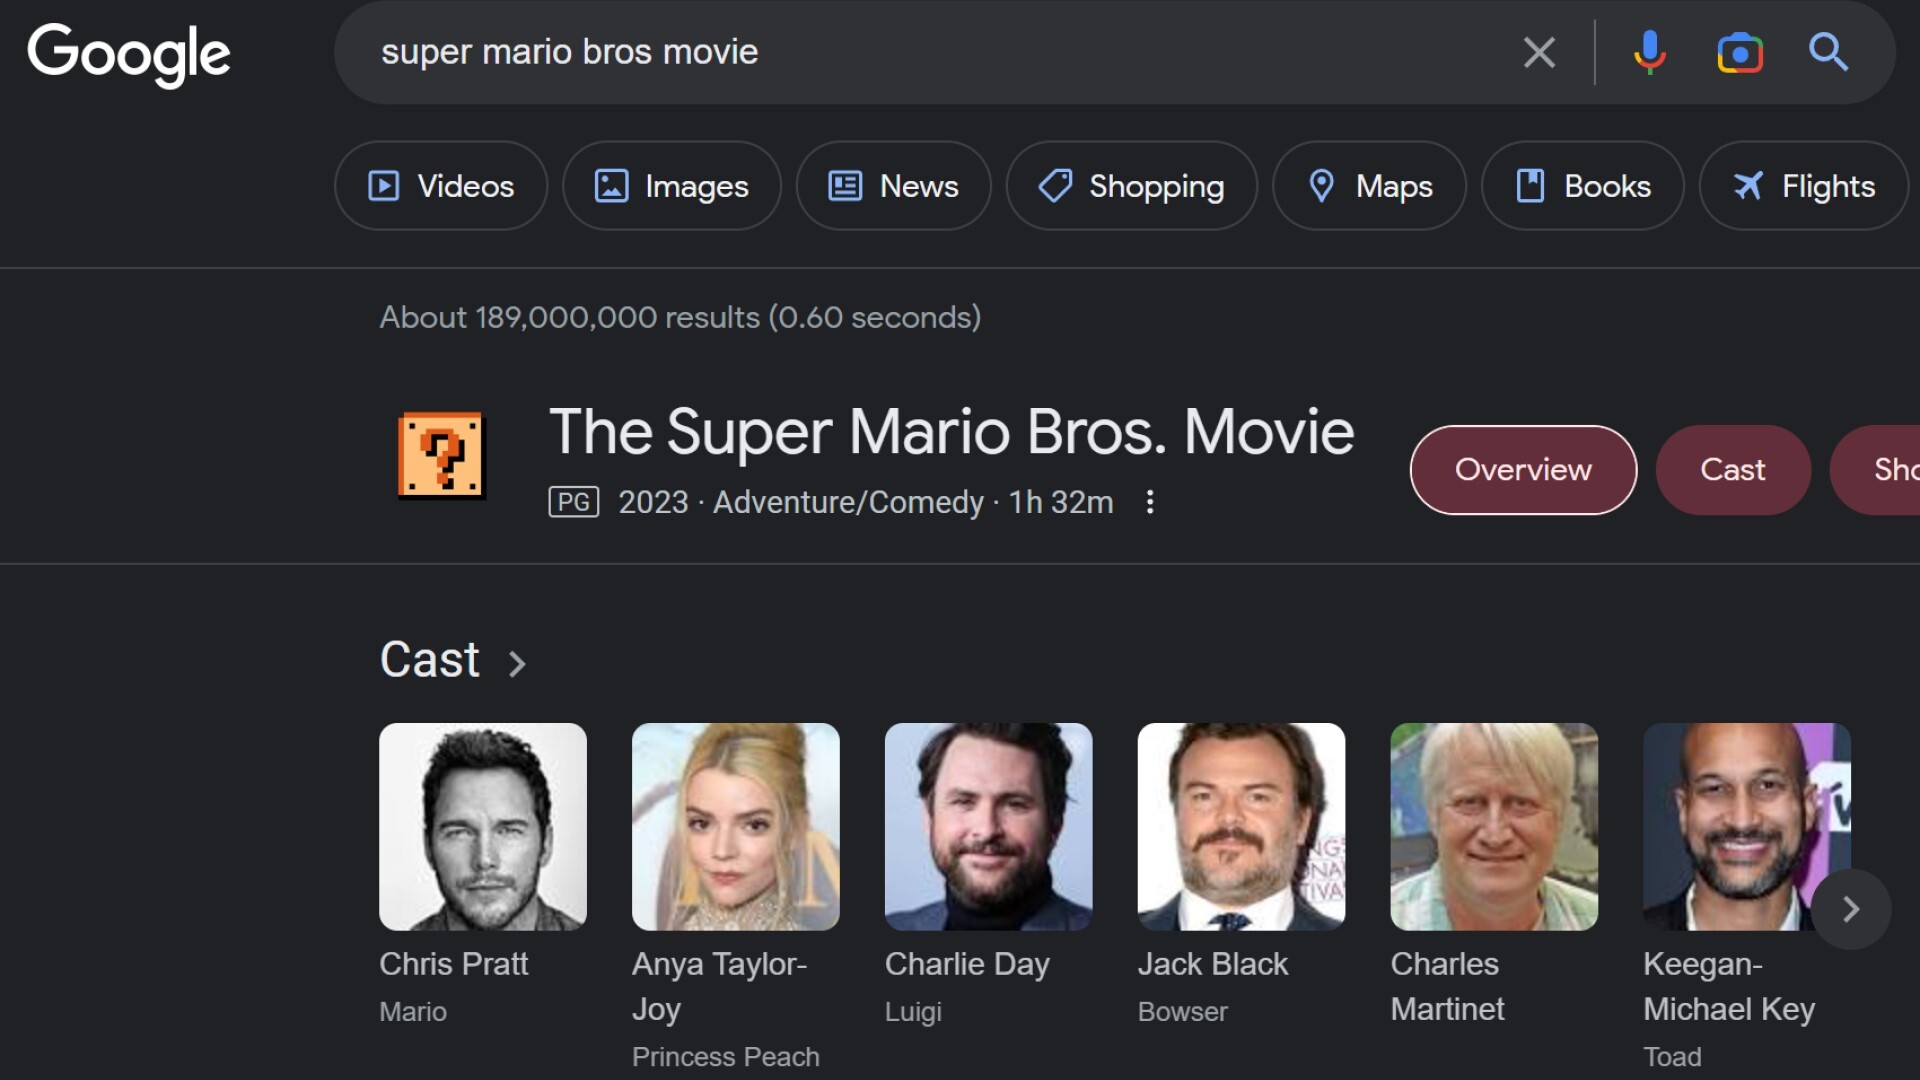 Google Adds Retro Easter Egg To "Super Mario Bros. Movie" Searches